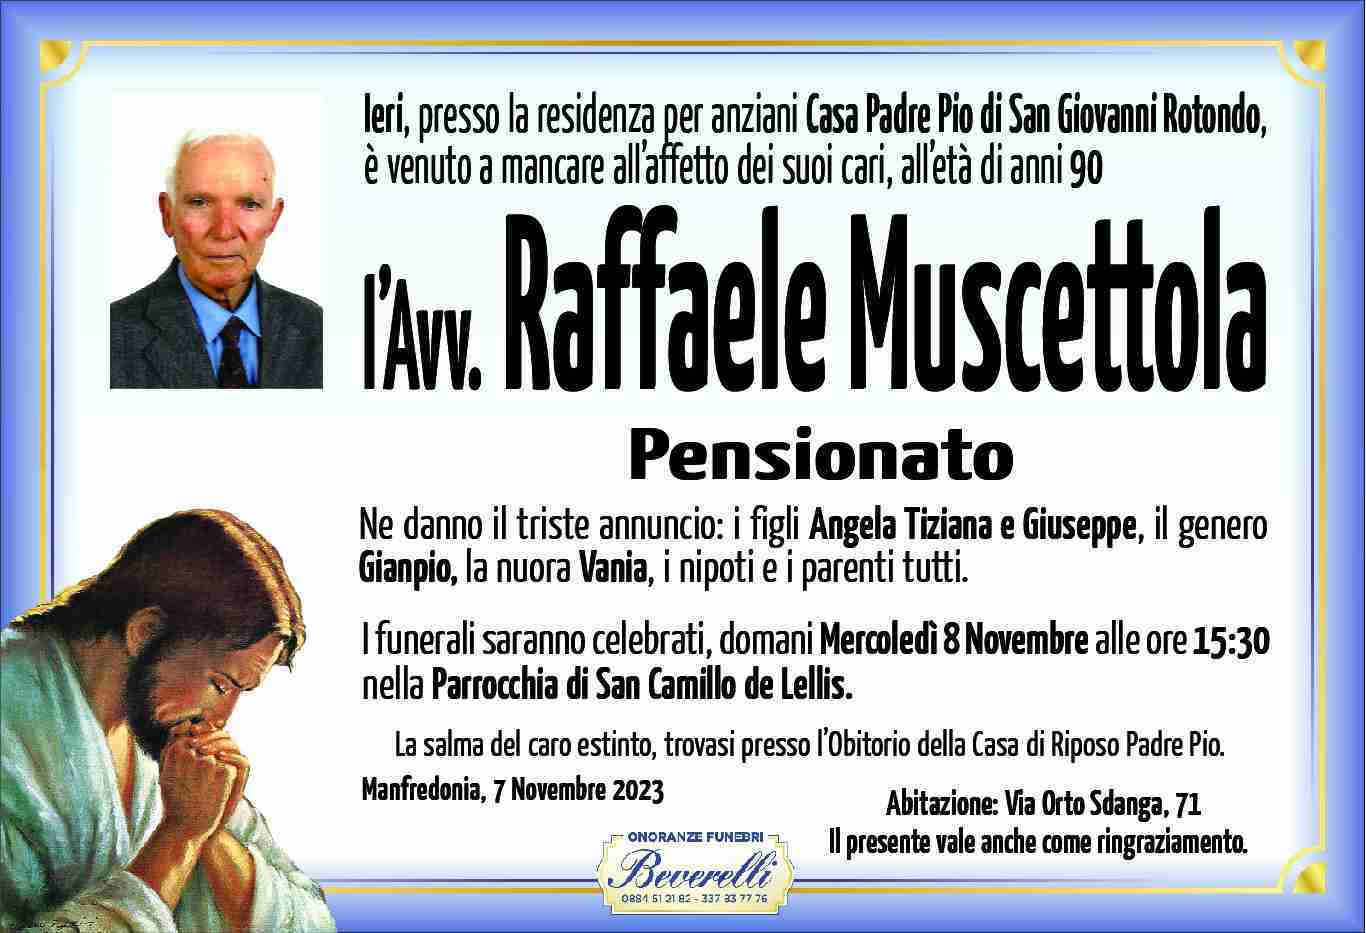 Raffaele Muscettola